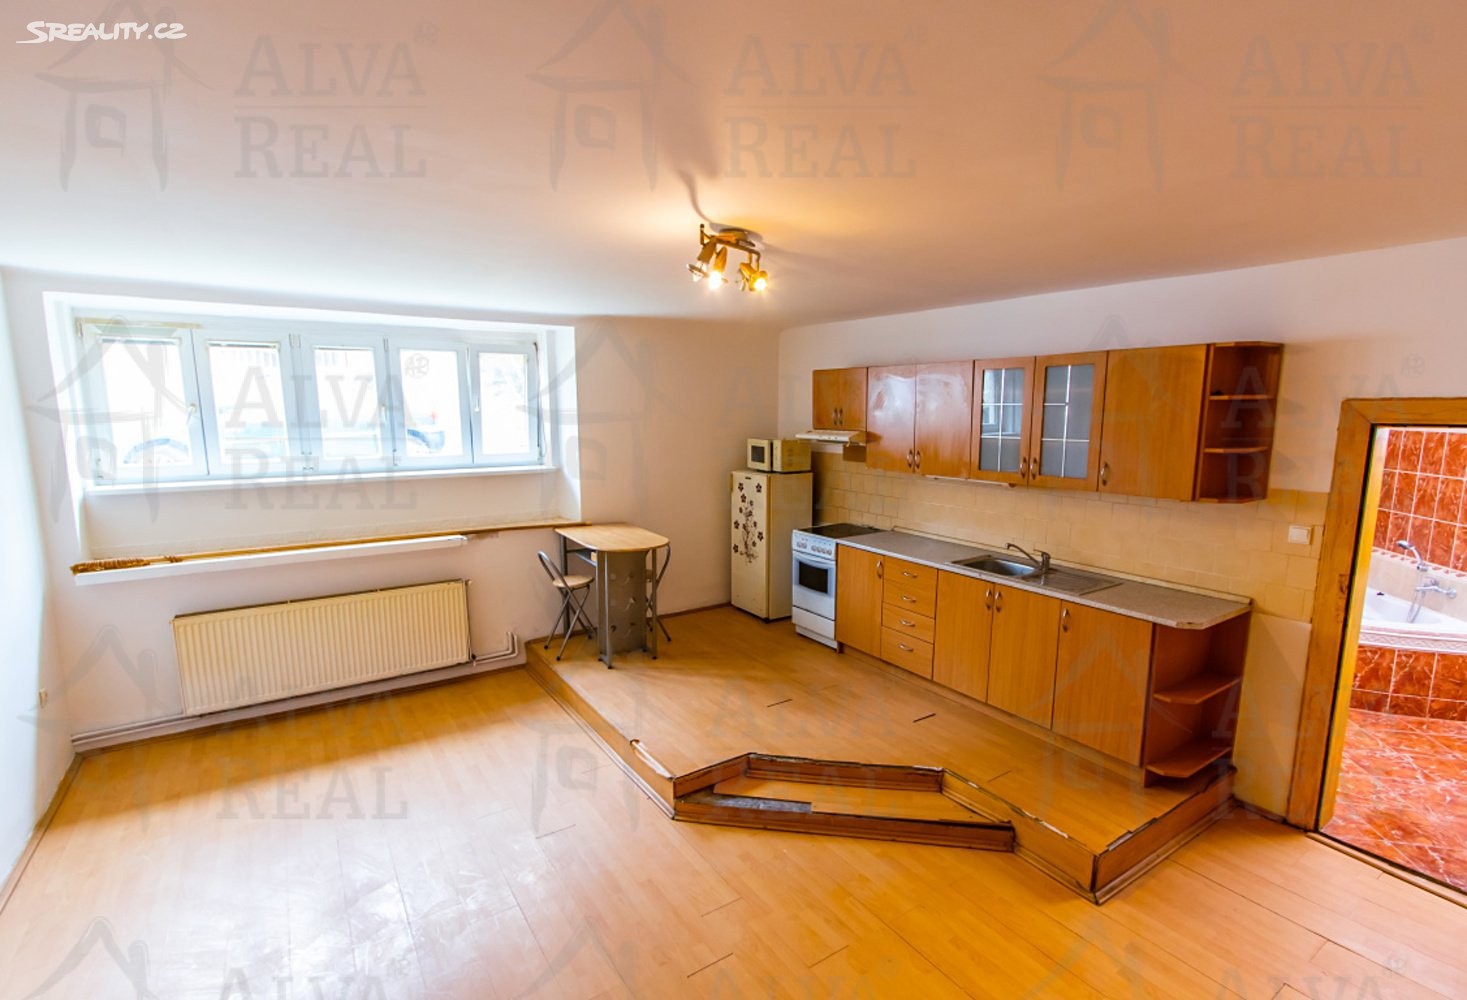 Prodej bytu 2+kk 63 m², Údolní, Brno - Stránice